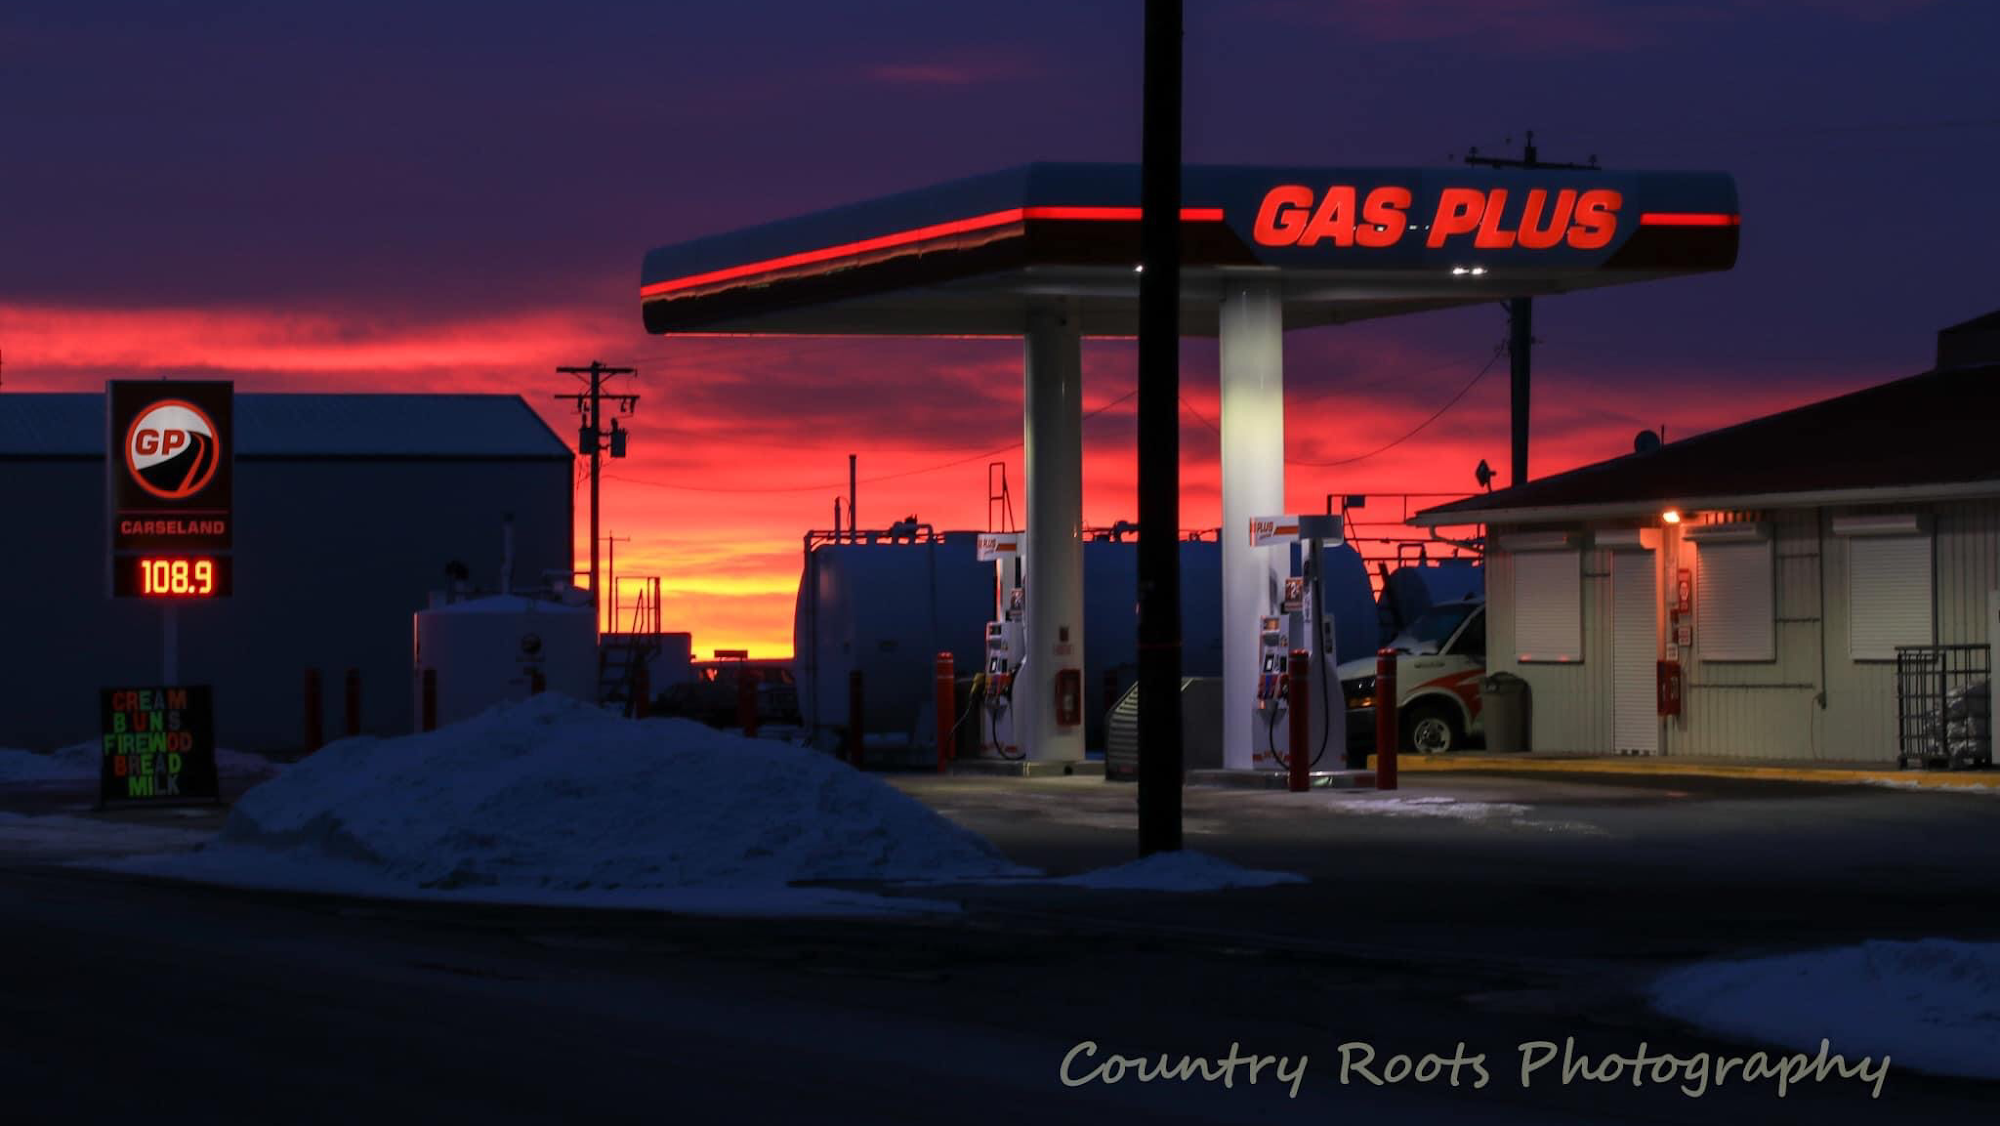 Gas Plus